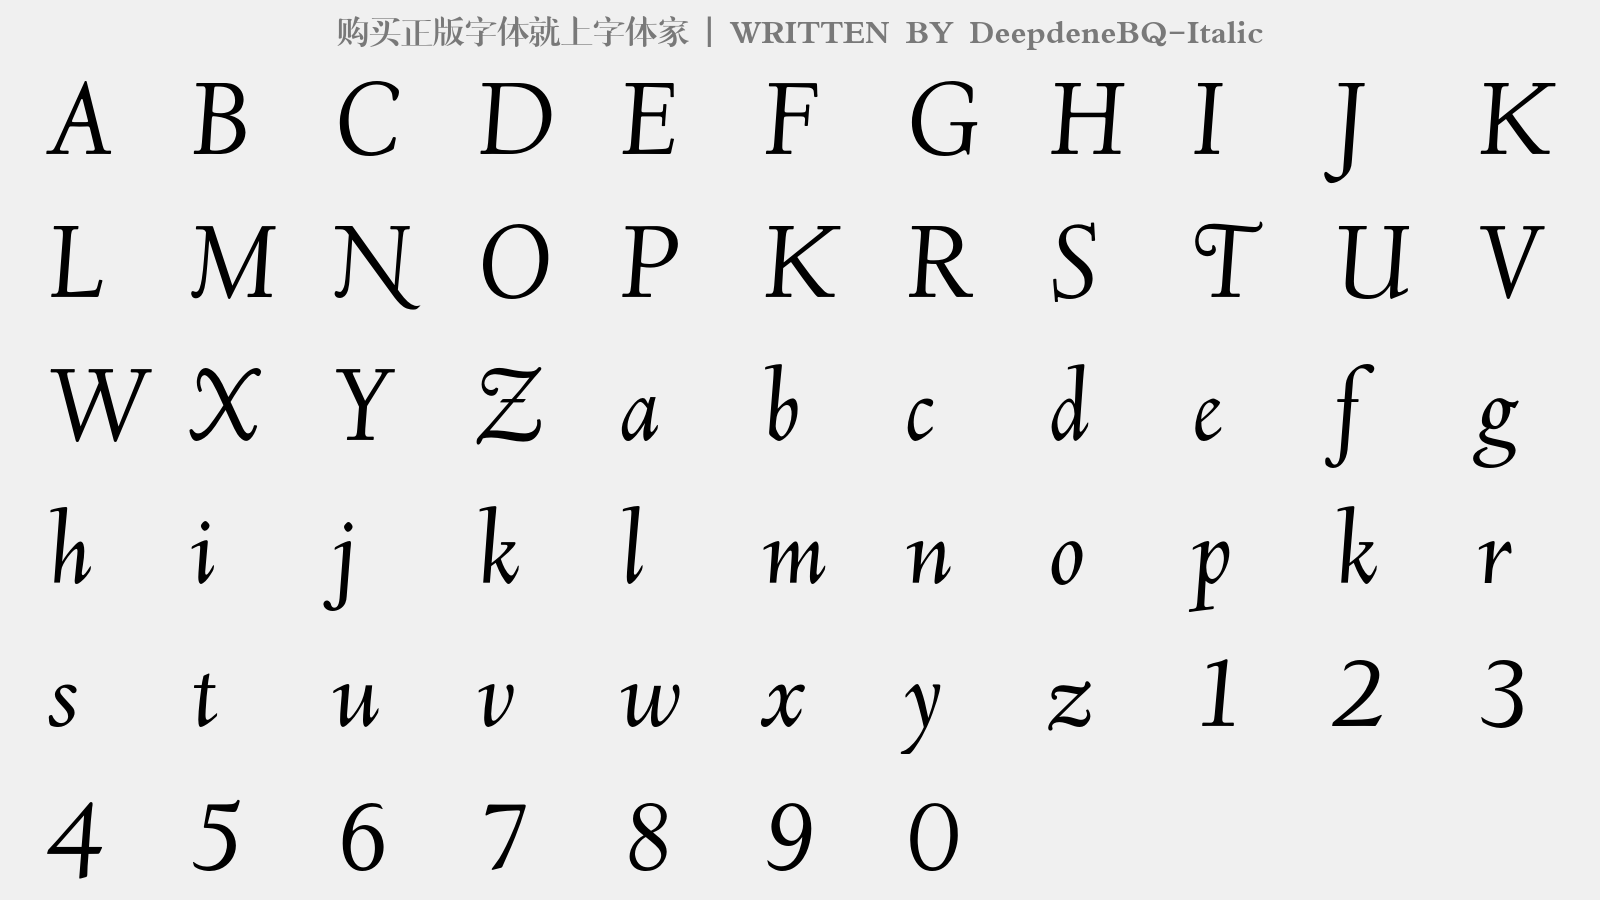 DeepdeneBQ-Italic - 大写字母/小写字母/数字